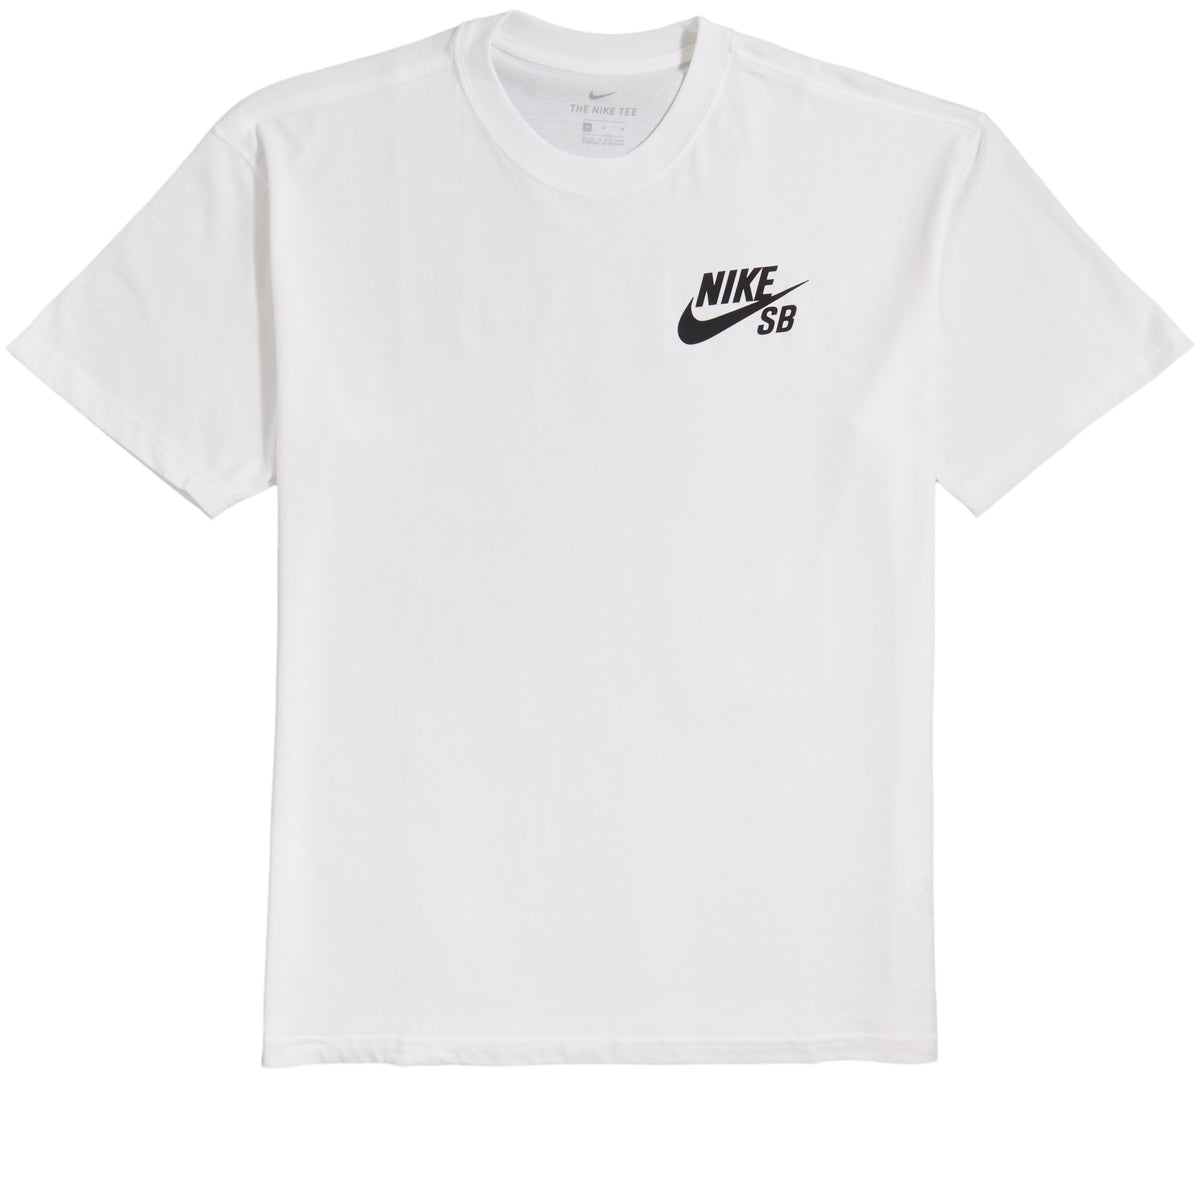 Nike SB Logo T-Shirt - White/Black image 1